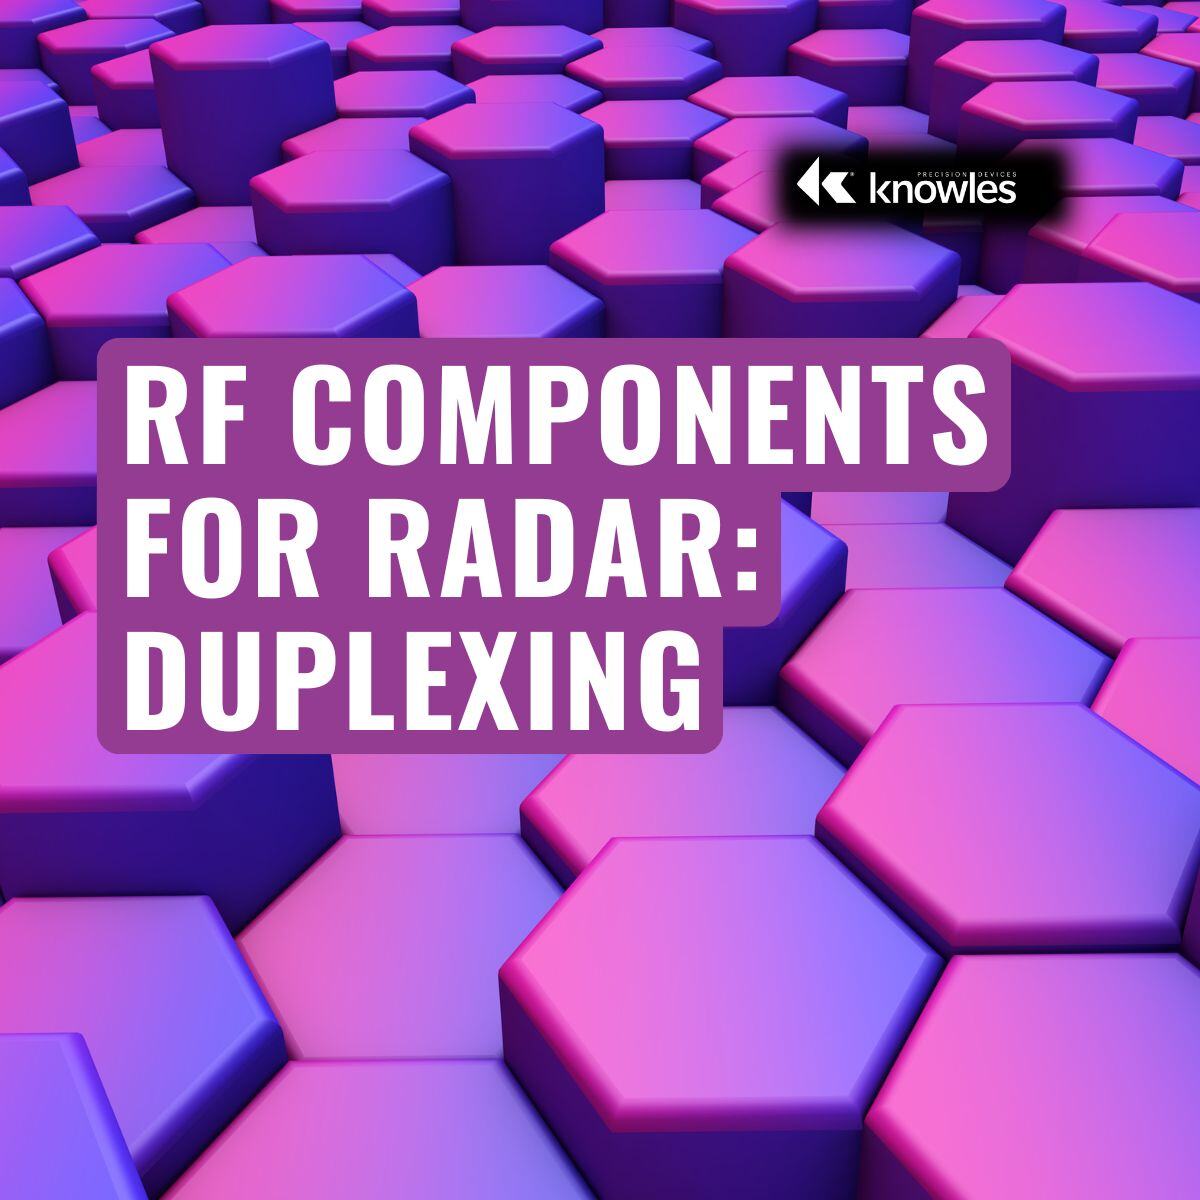 RF Components for Radar: Duplexing